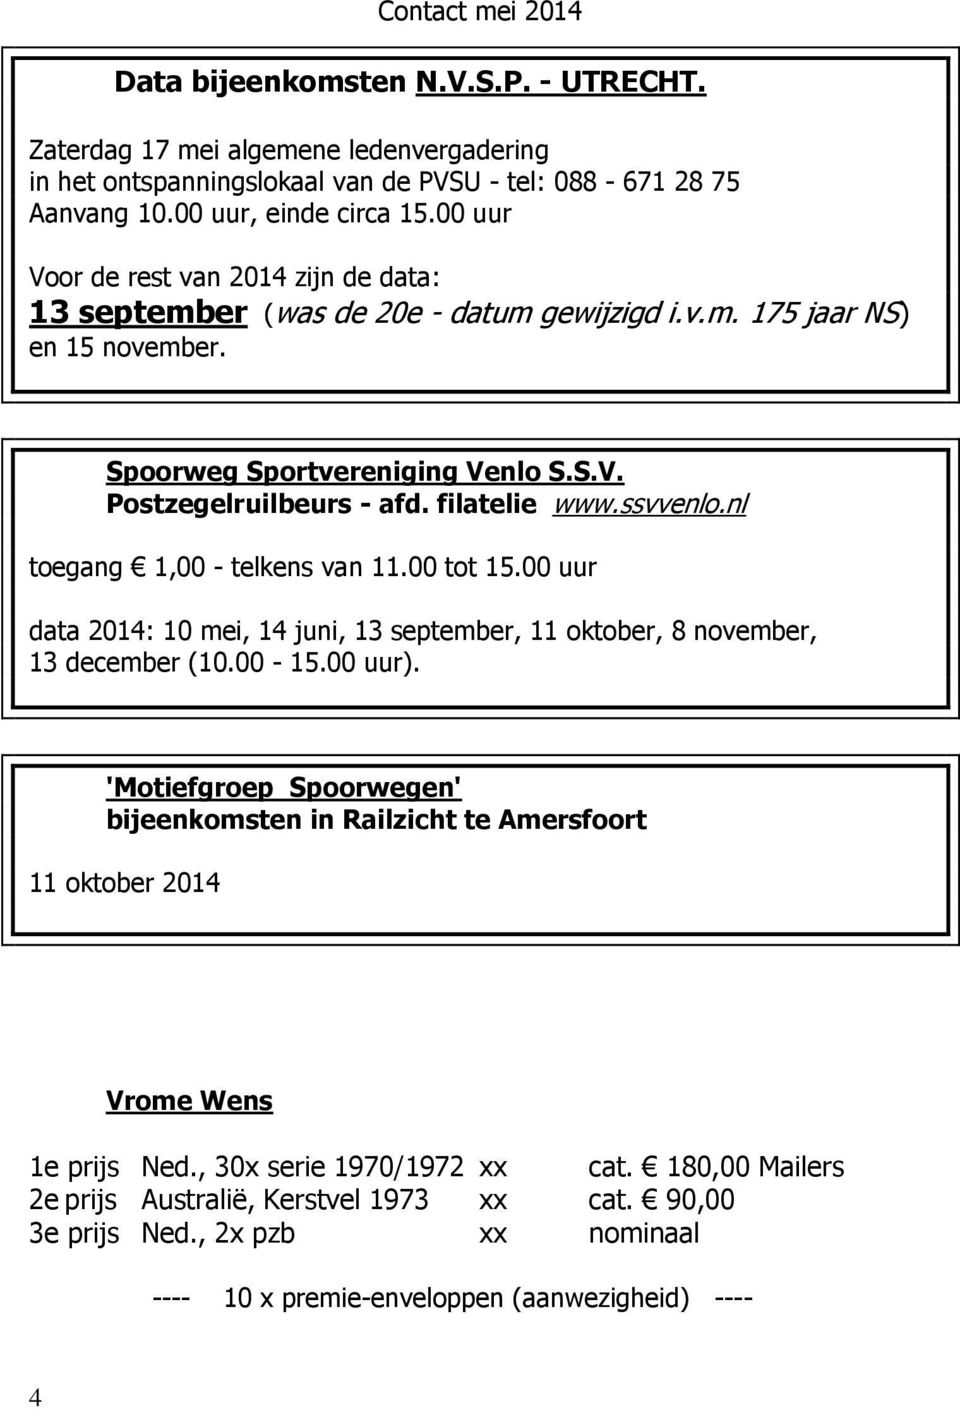 ssvvenlo.nl toegang 1,00 - telkens van 11.00 tot 15.00 uur data 2014: 10 mei, 14 juni, 13 september, 11 oktober, 8 november, 13 december (10.00-15.00 uur).